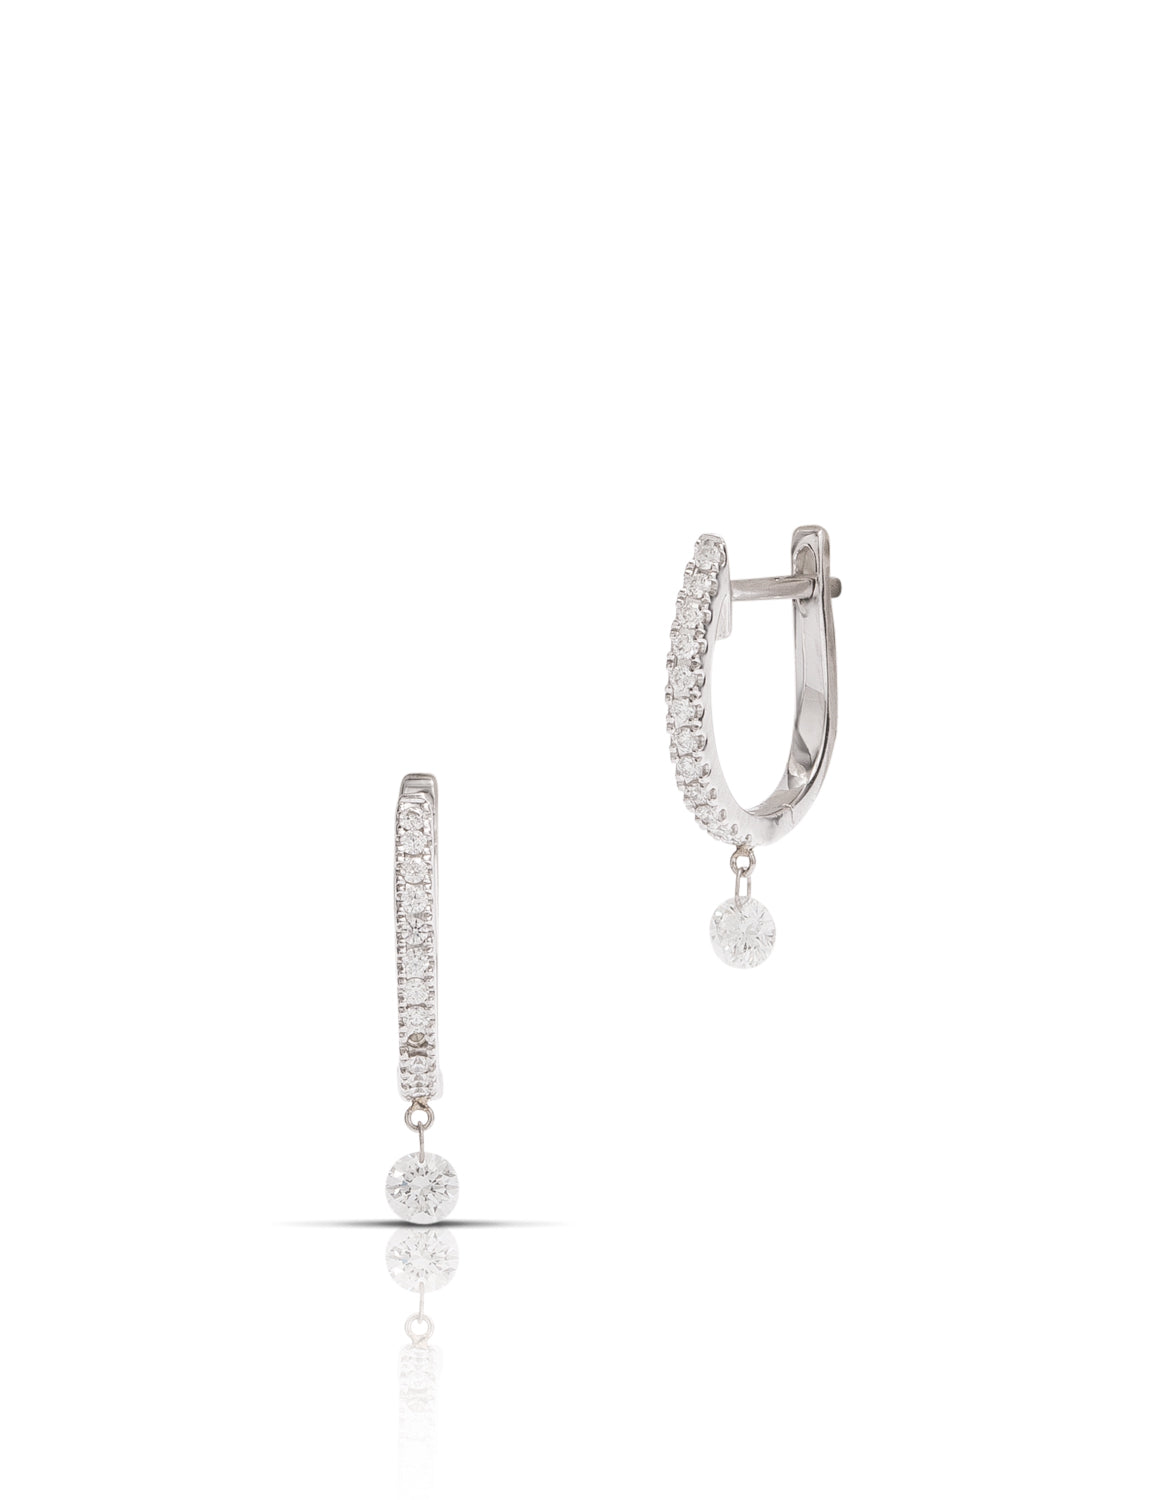 Dancing Diamond Earrings in White Gold - Charles Koll Jewellers